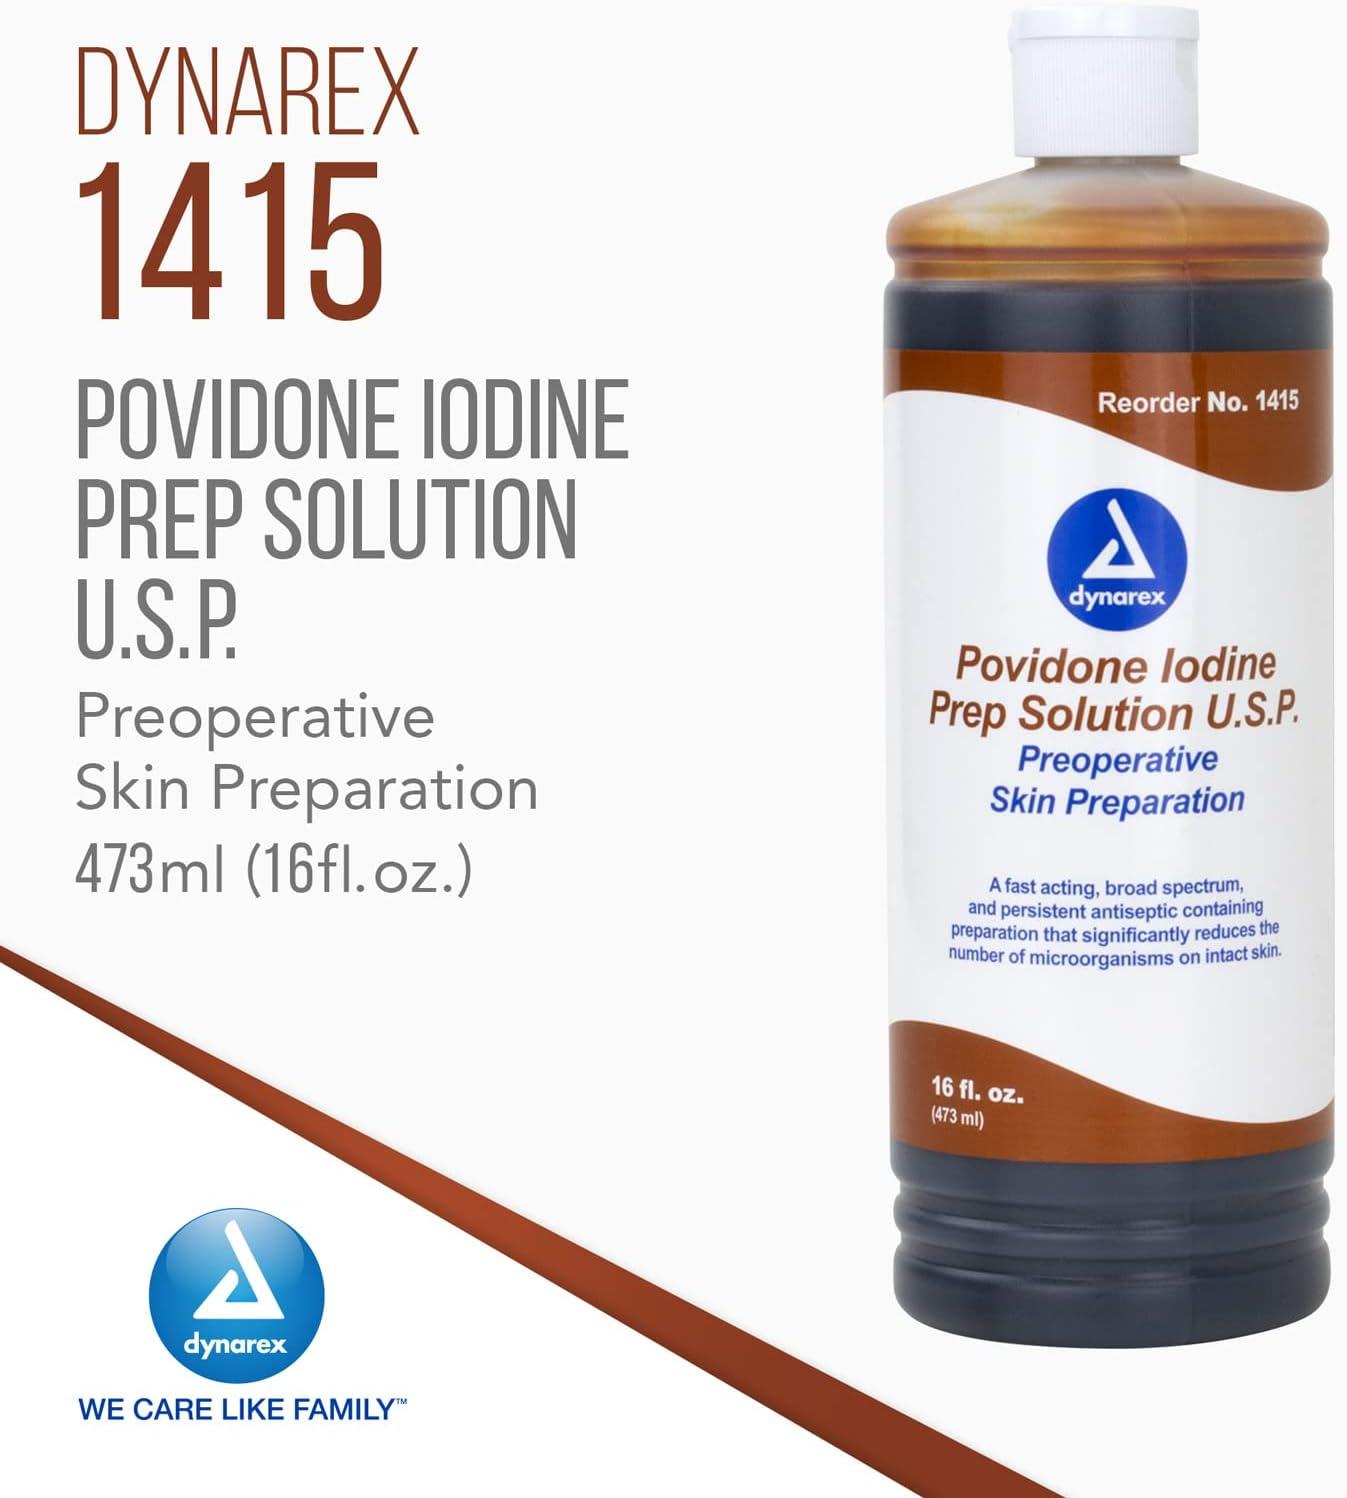 Povidone Iodine Prep Solutions